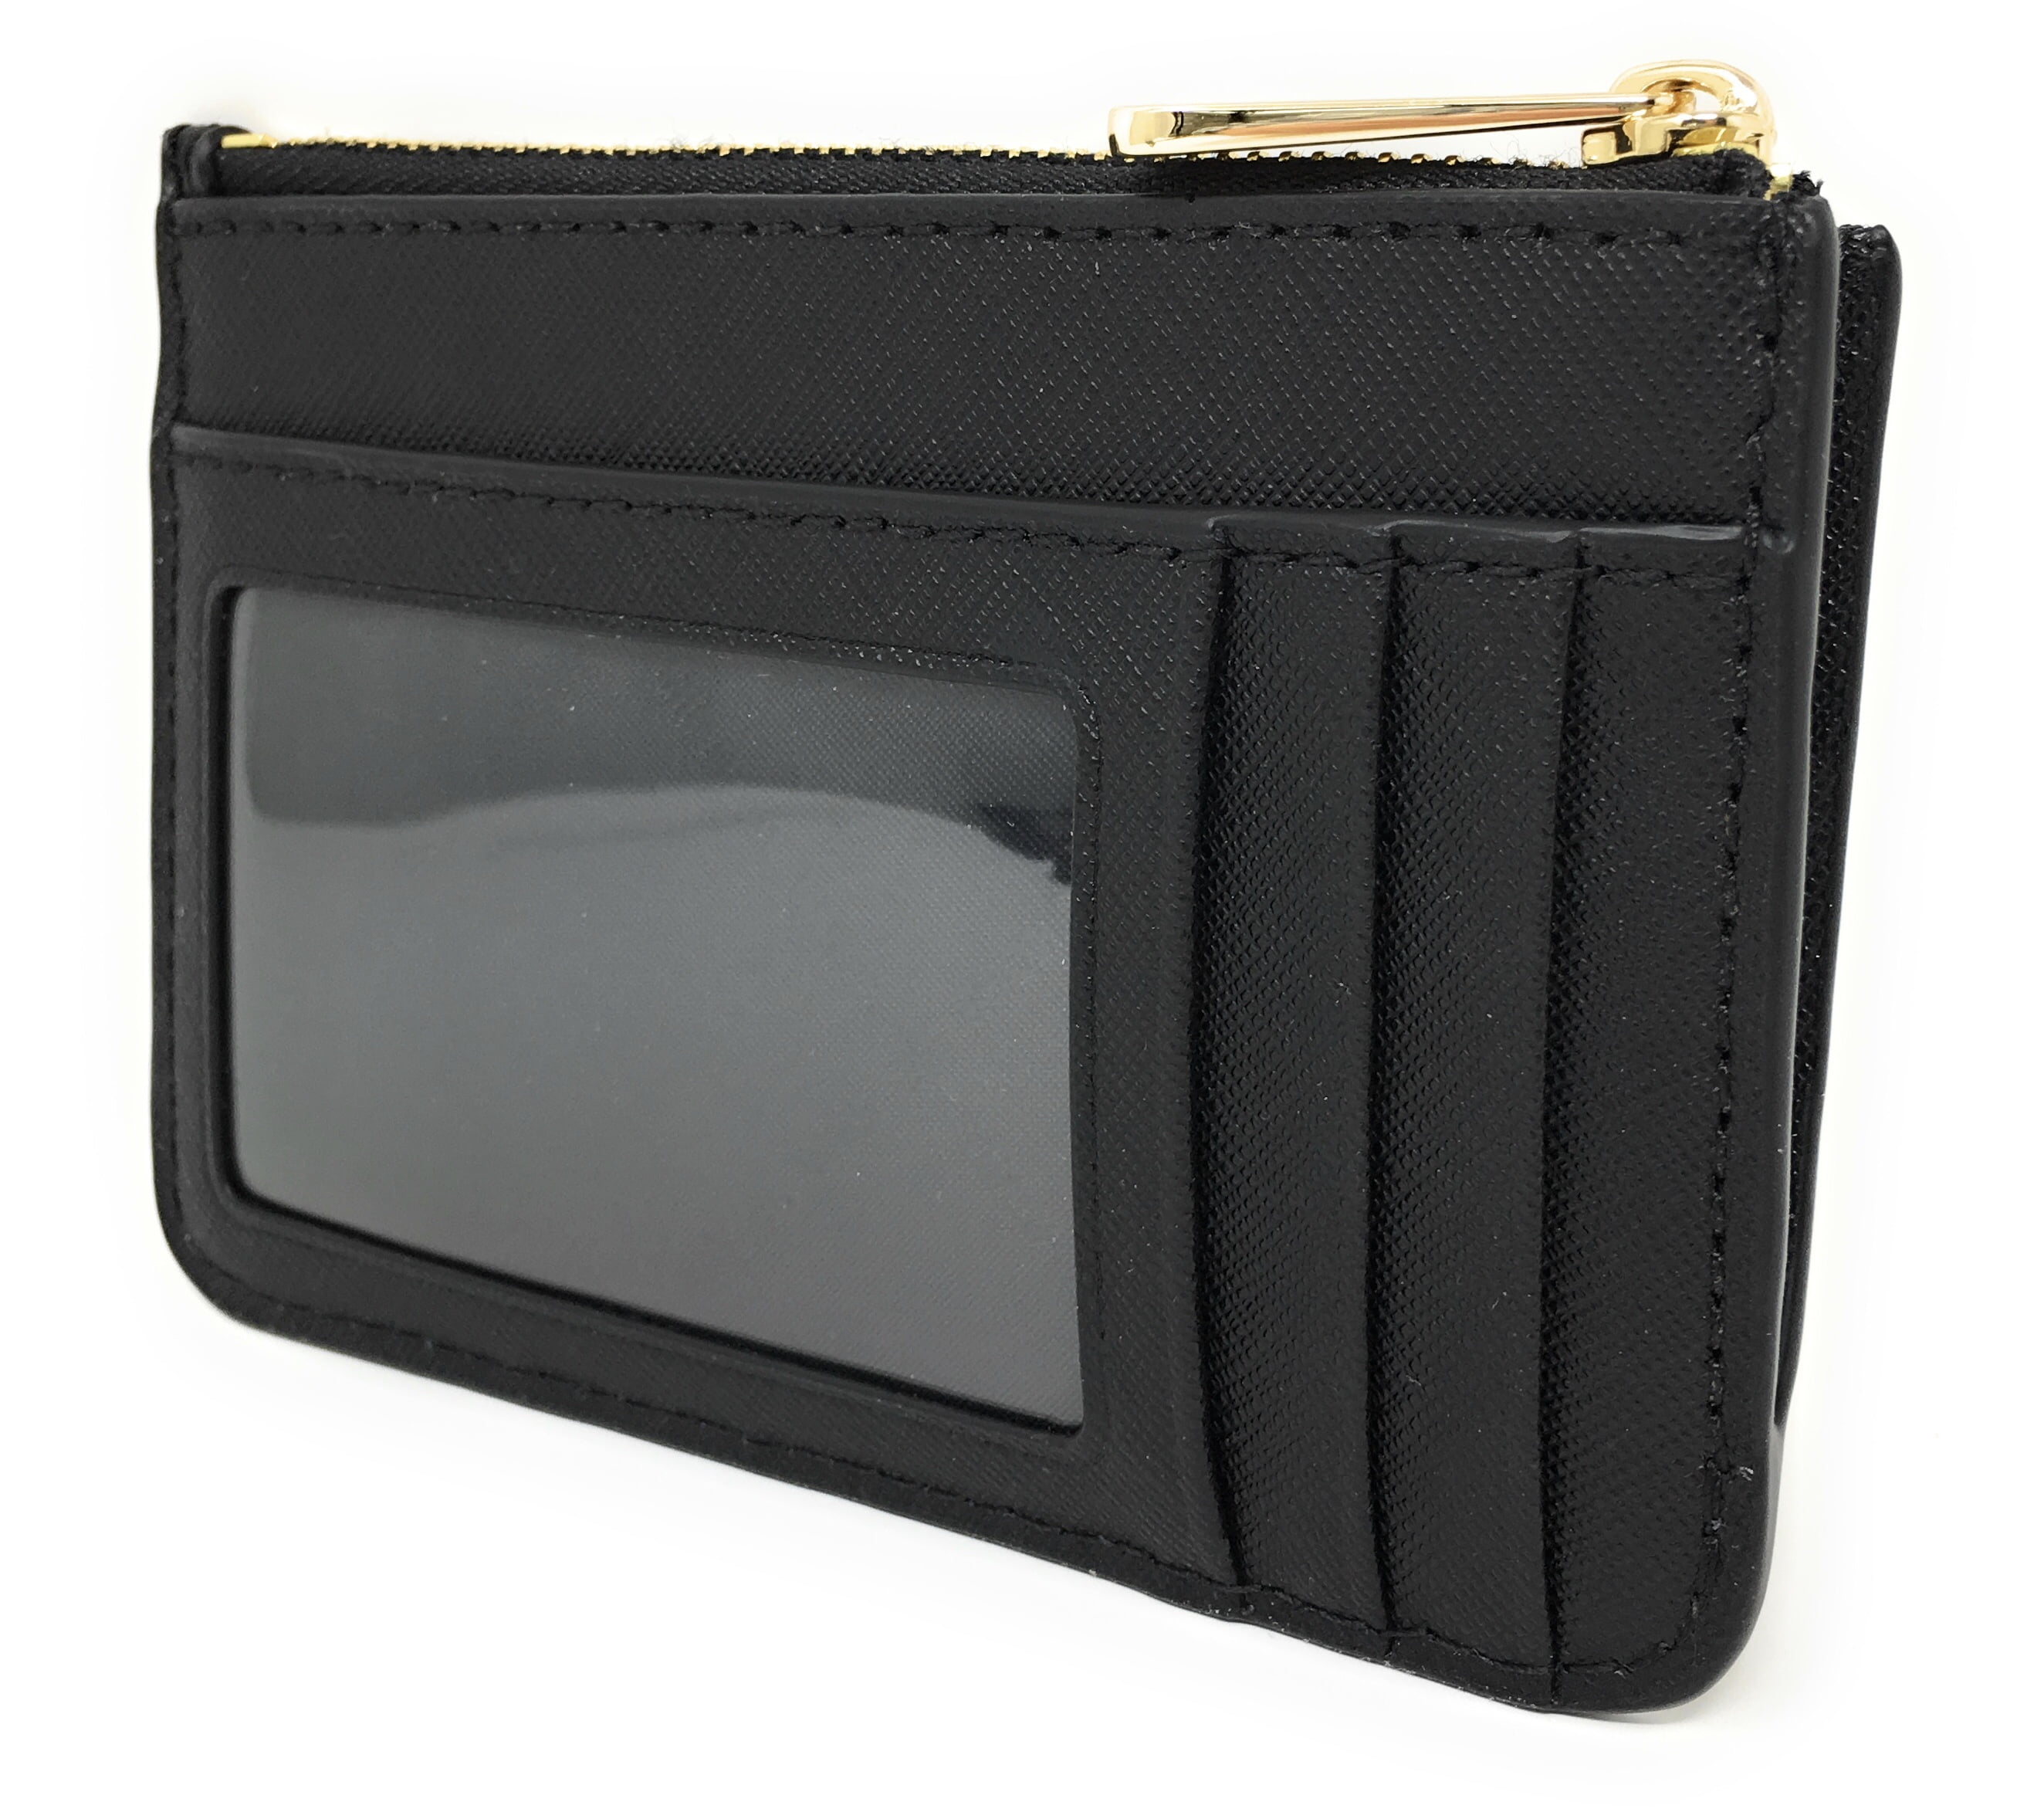 Michael Kors Men's Black Leather Small Travel Pouch 33H9LACU1X-001 -  Handbags - Jomashop